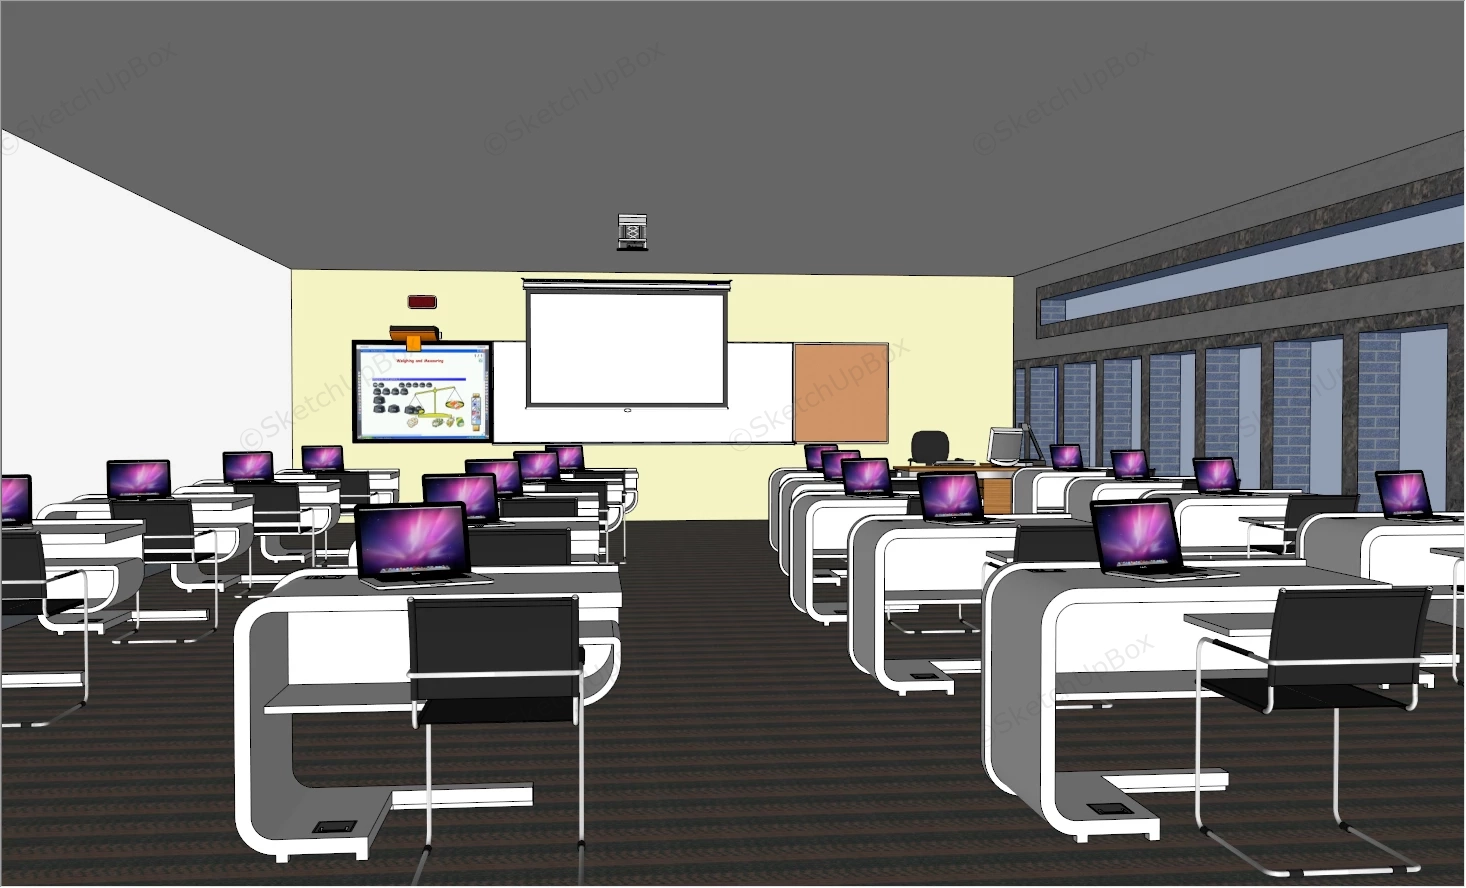 Computer Lab Classroom Design sketchup model preview - SketchupBox